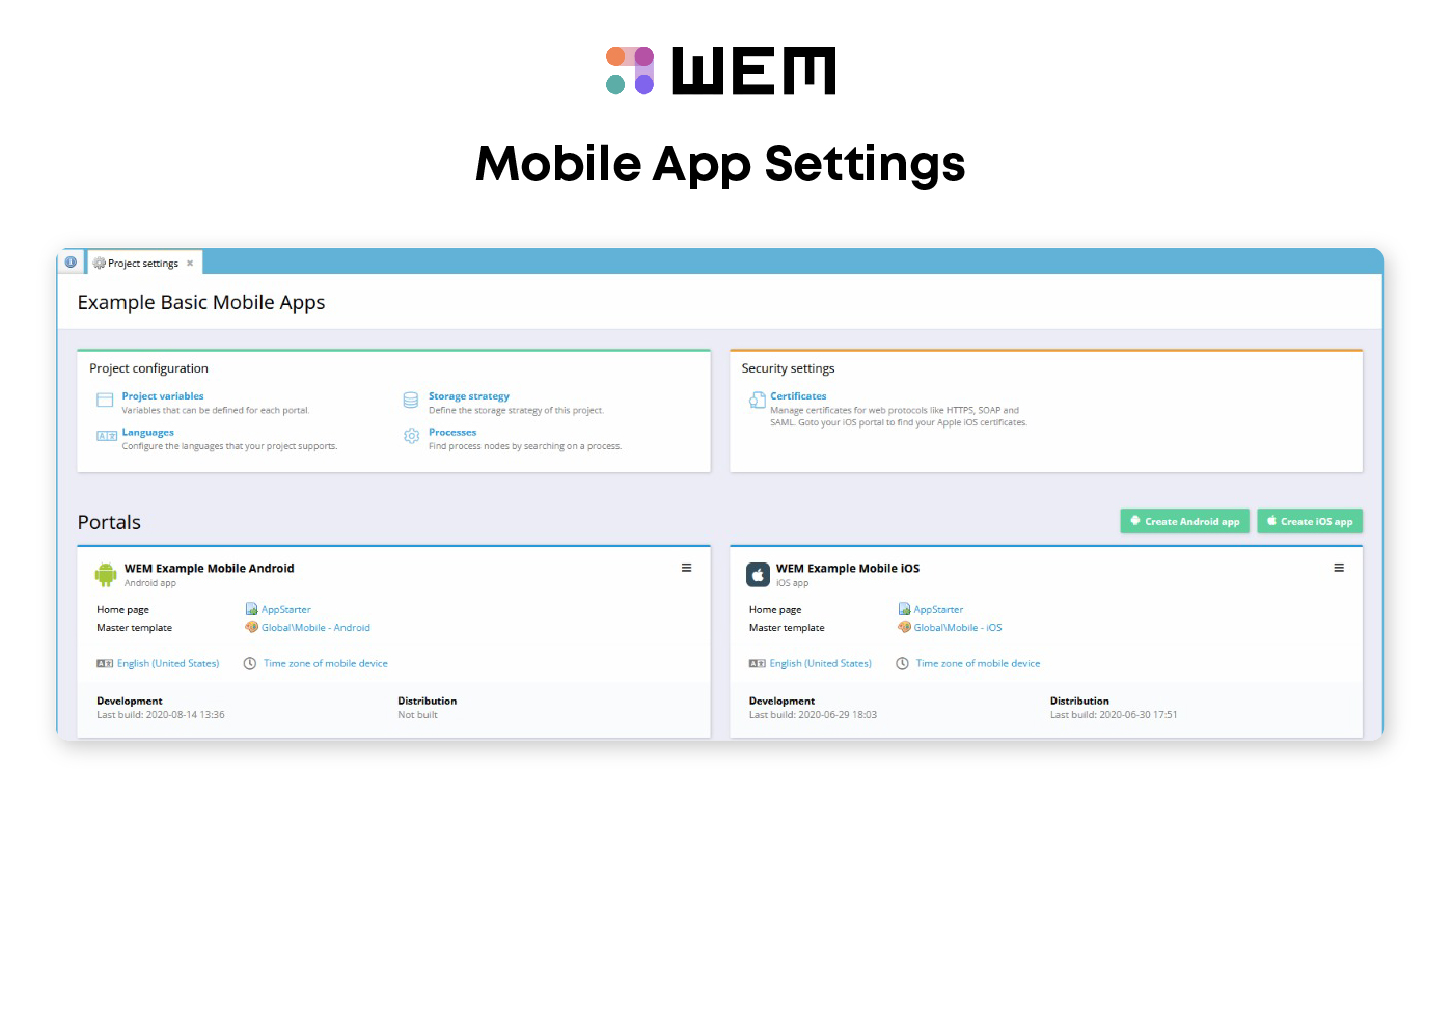 Mobile App Settings in WEM